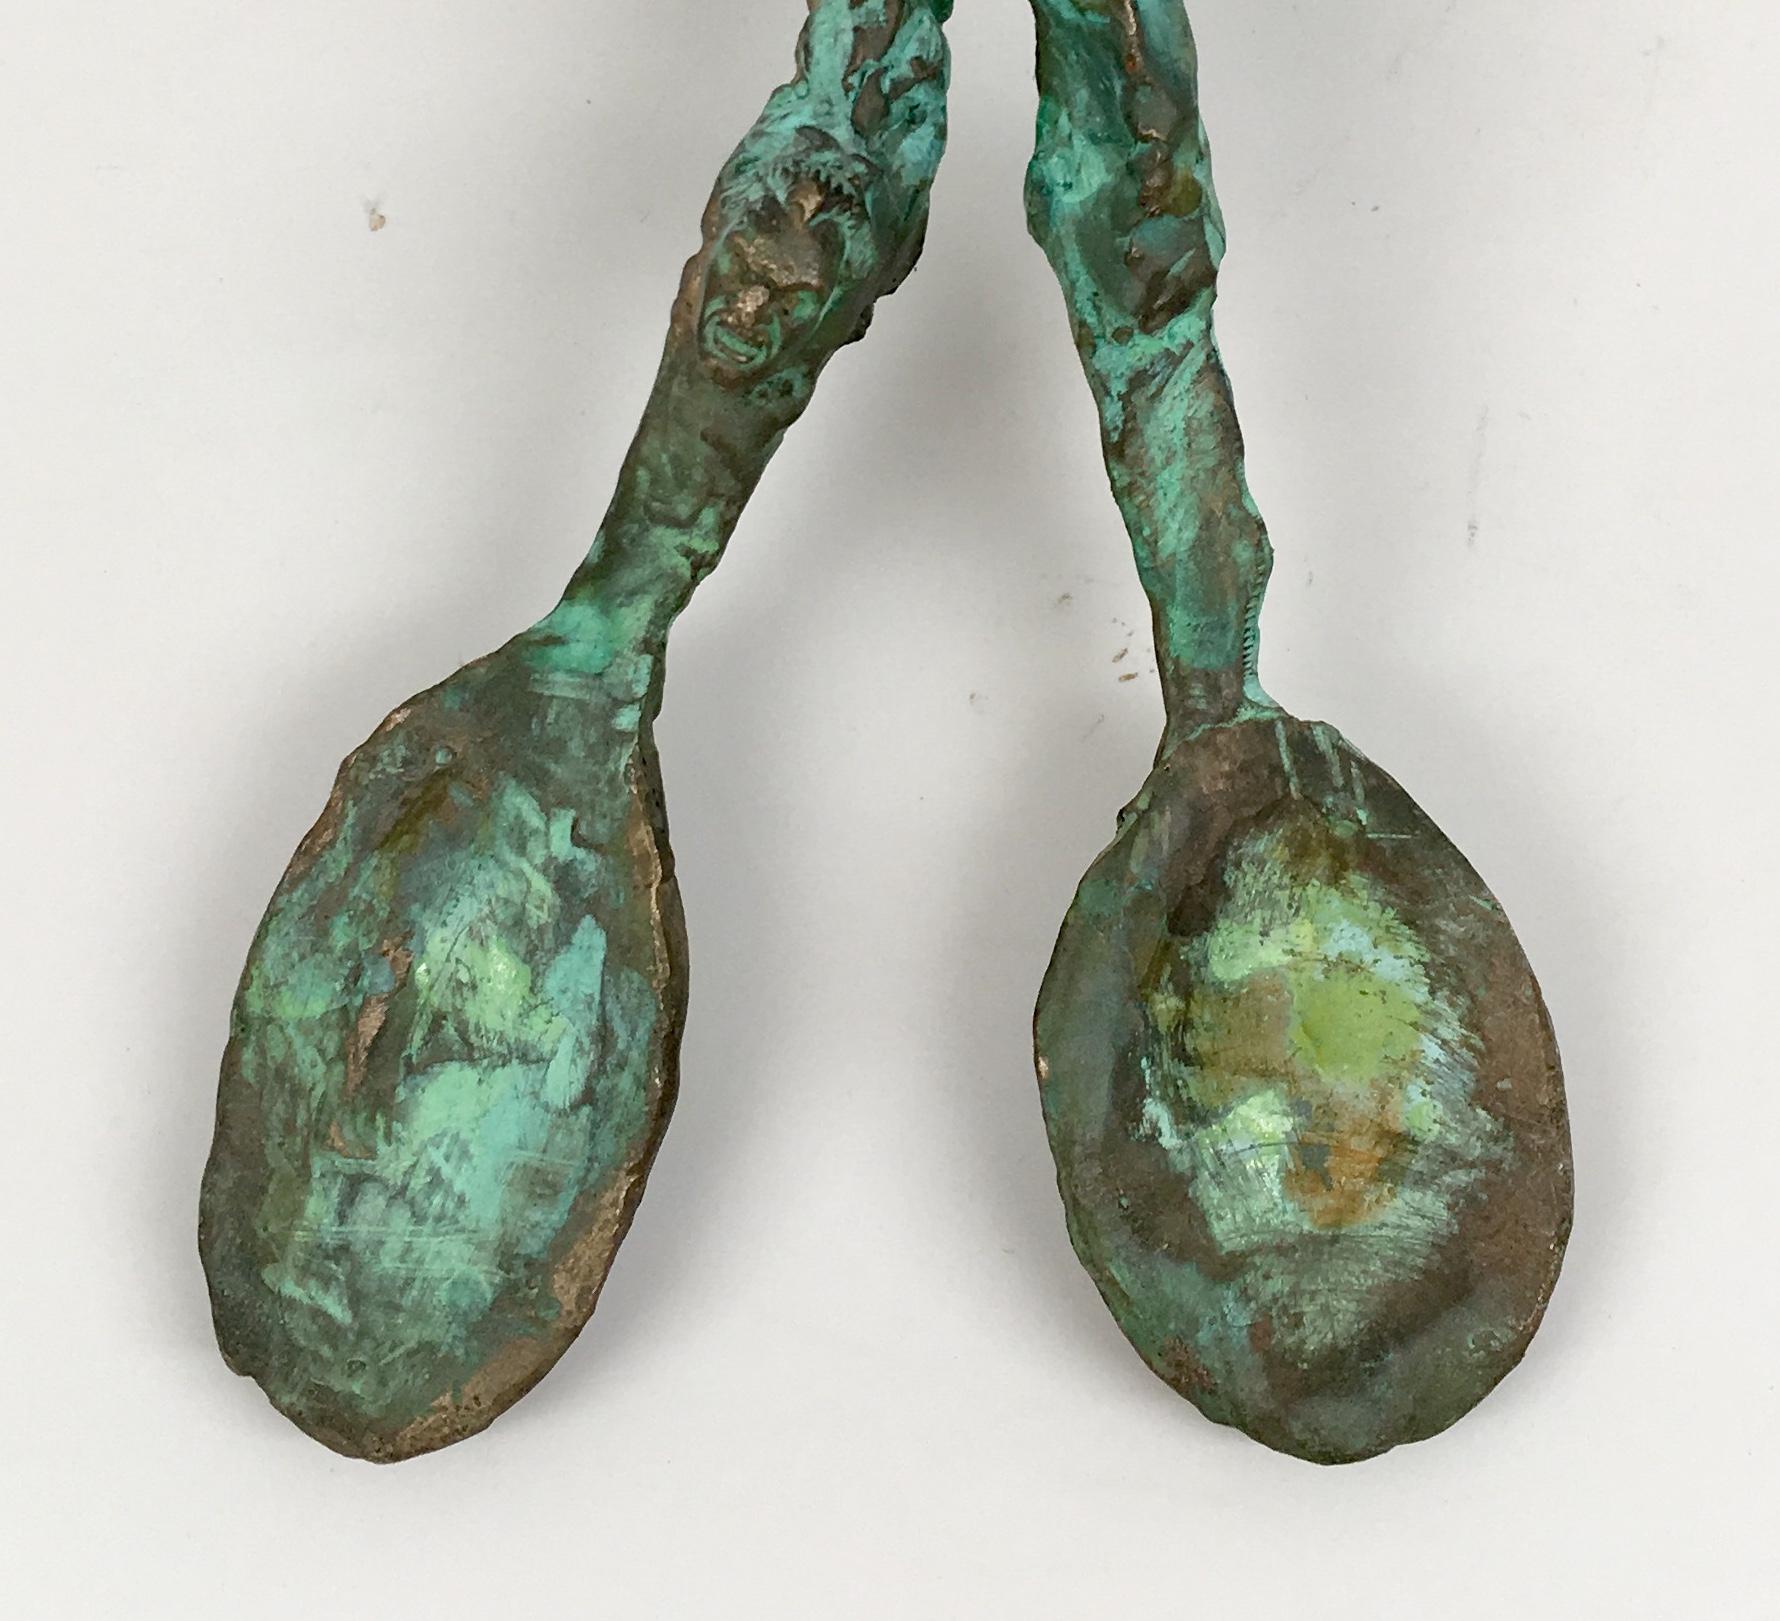 Bronze Sculpture: 'Rhoman Ceremonial Lovers’ Spoon I' - Gold Still-Life Sculpture by Joshua Goode